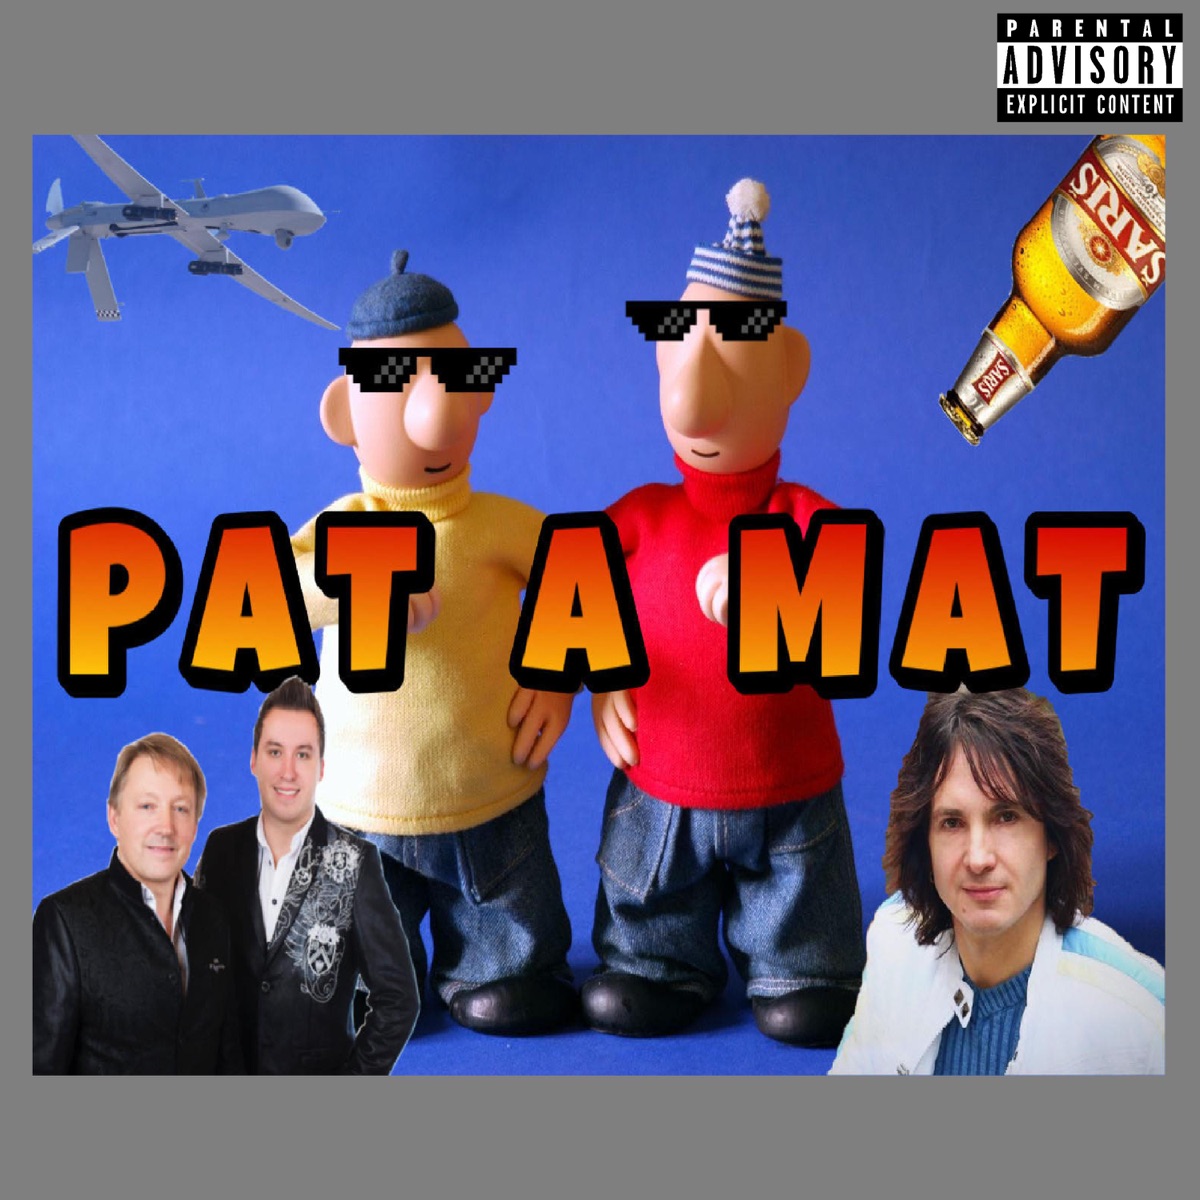 Pat a Mat - Single - Album by What2do? - Apple Music